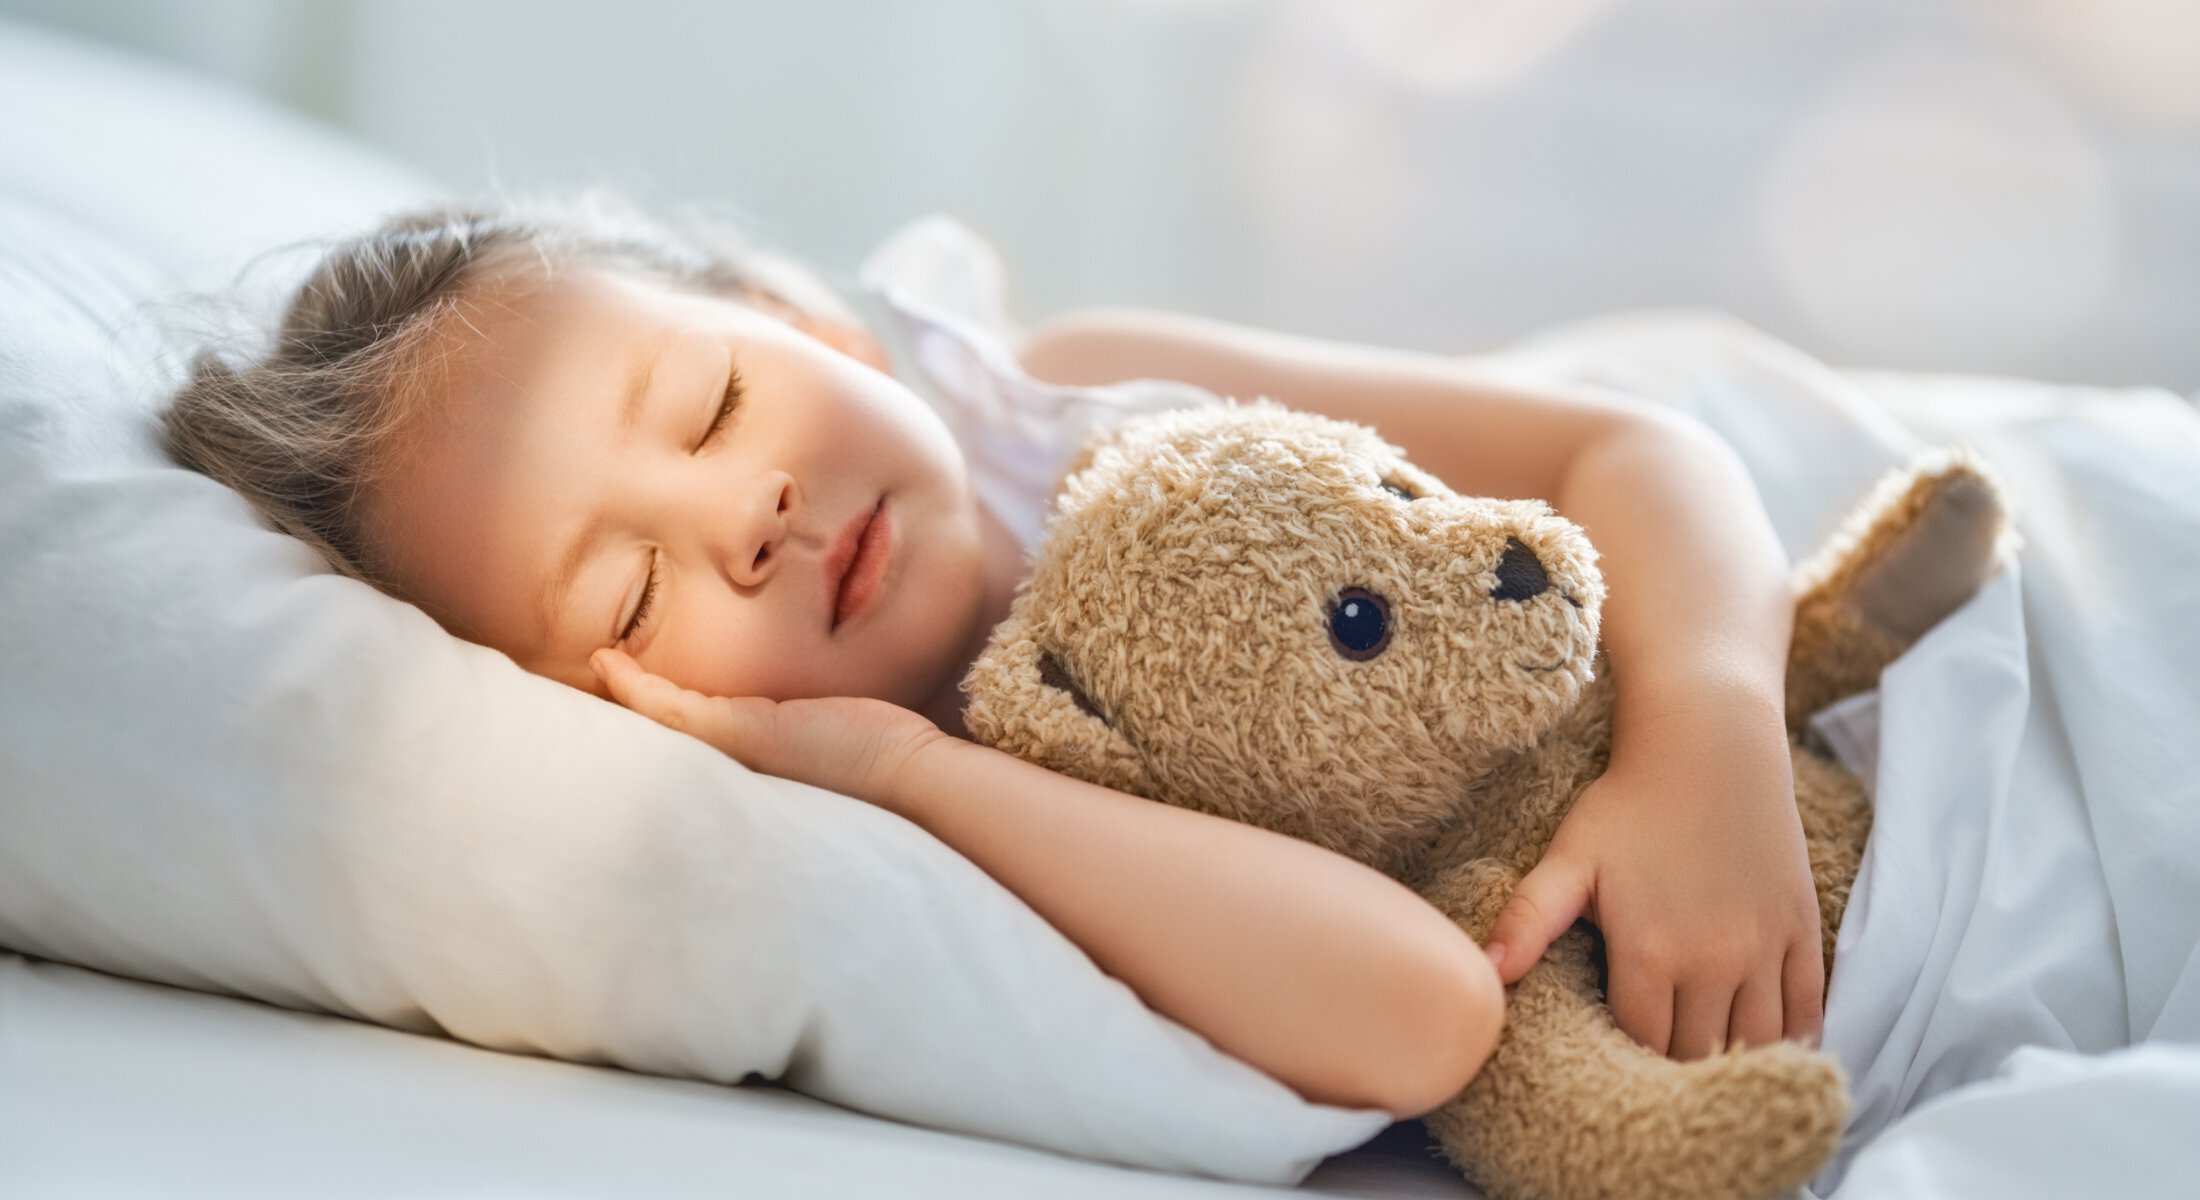 Sherman Oaks Pediatric Sleep Apnea Solutions patient model sleeping